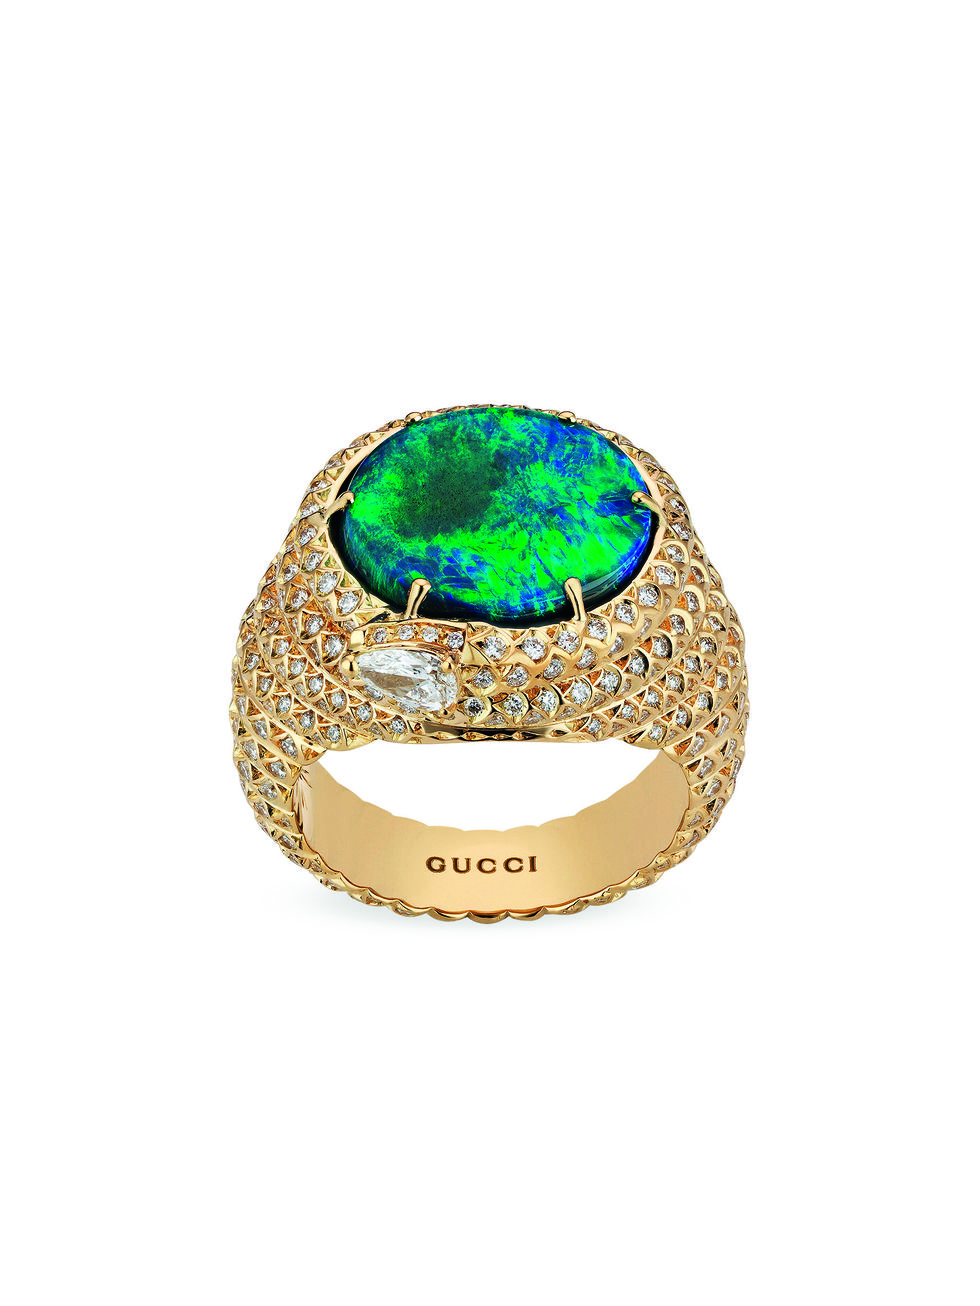 Gemstone, Jewellery, Ring, Fashion accessory, Turquoise, Emerald, Turquoise, Opal, Engagement ring, Diamond, 